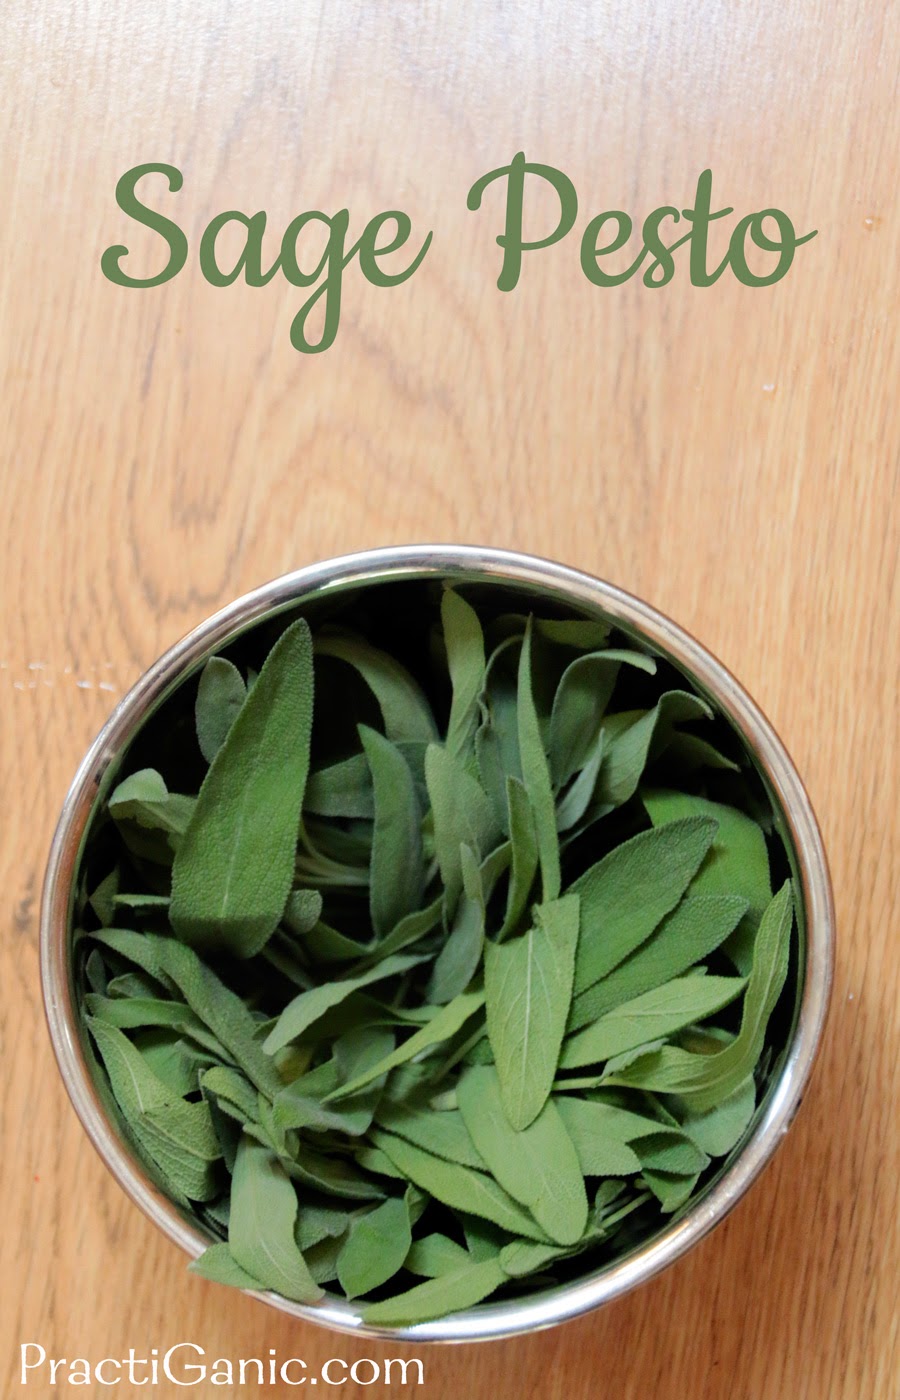 Sage Pesto